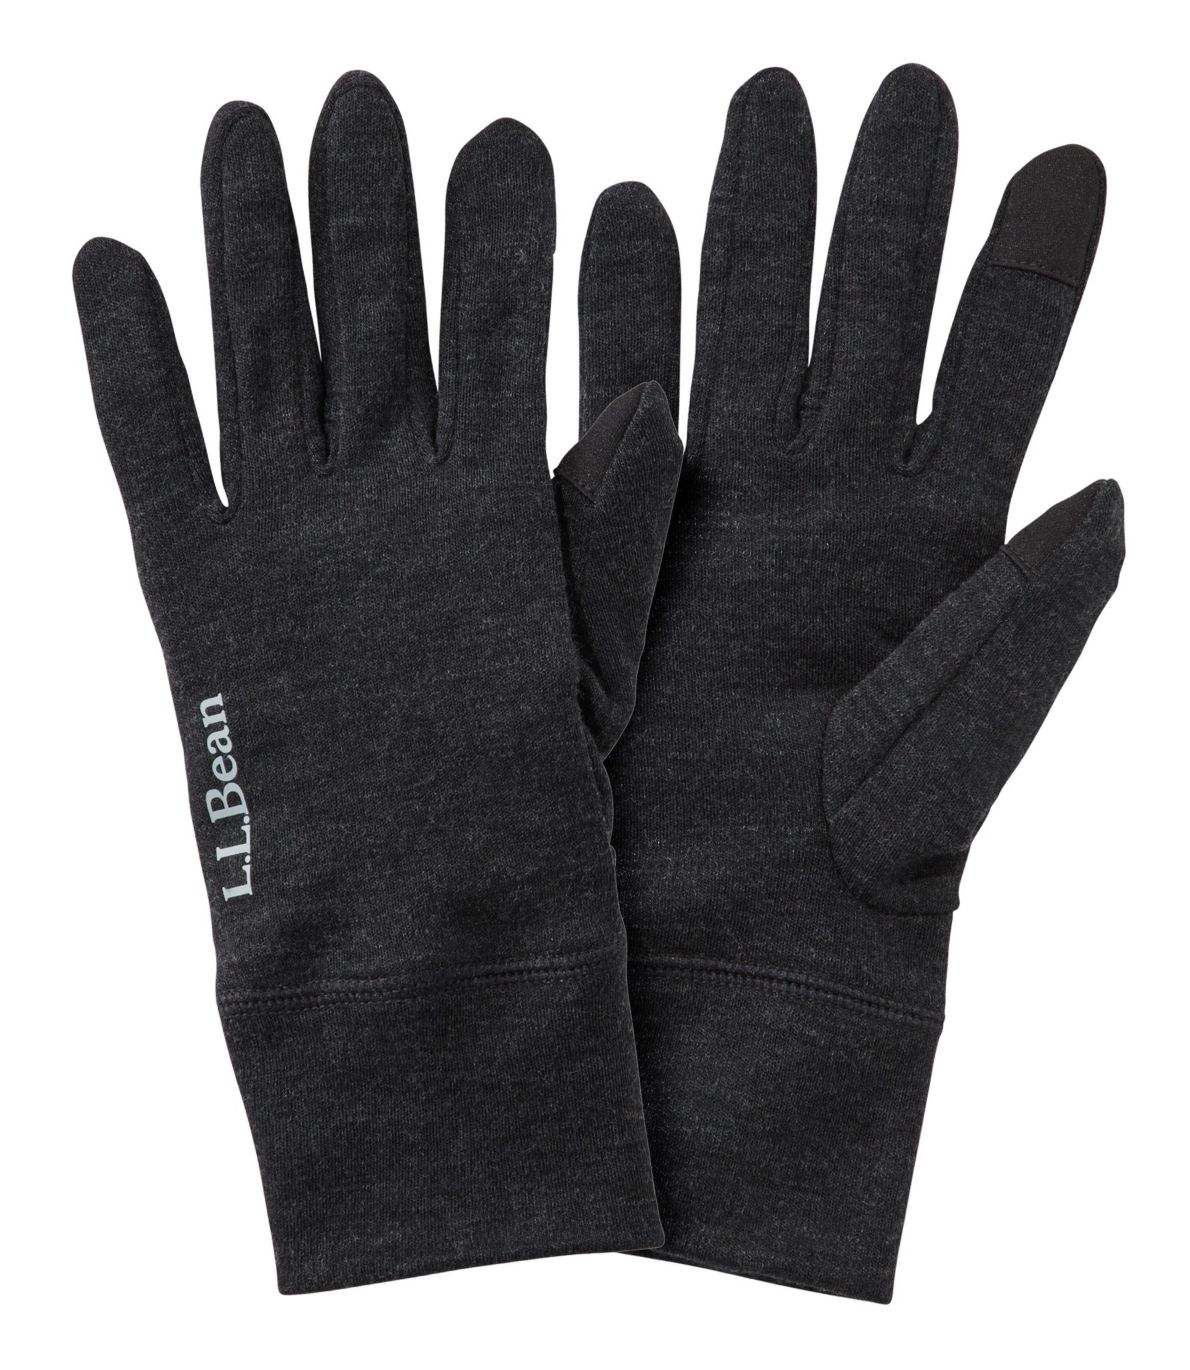 Men's Cresta Wool 250 Liner Gloves